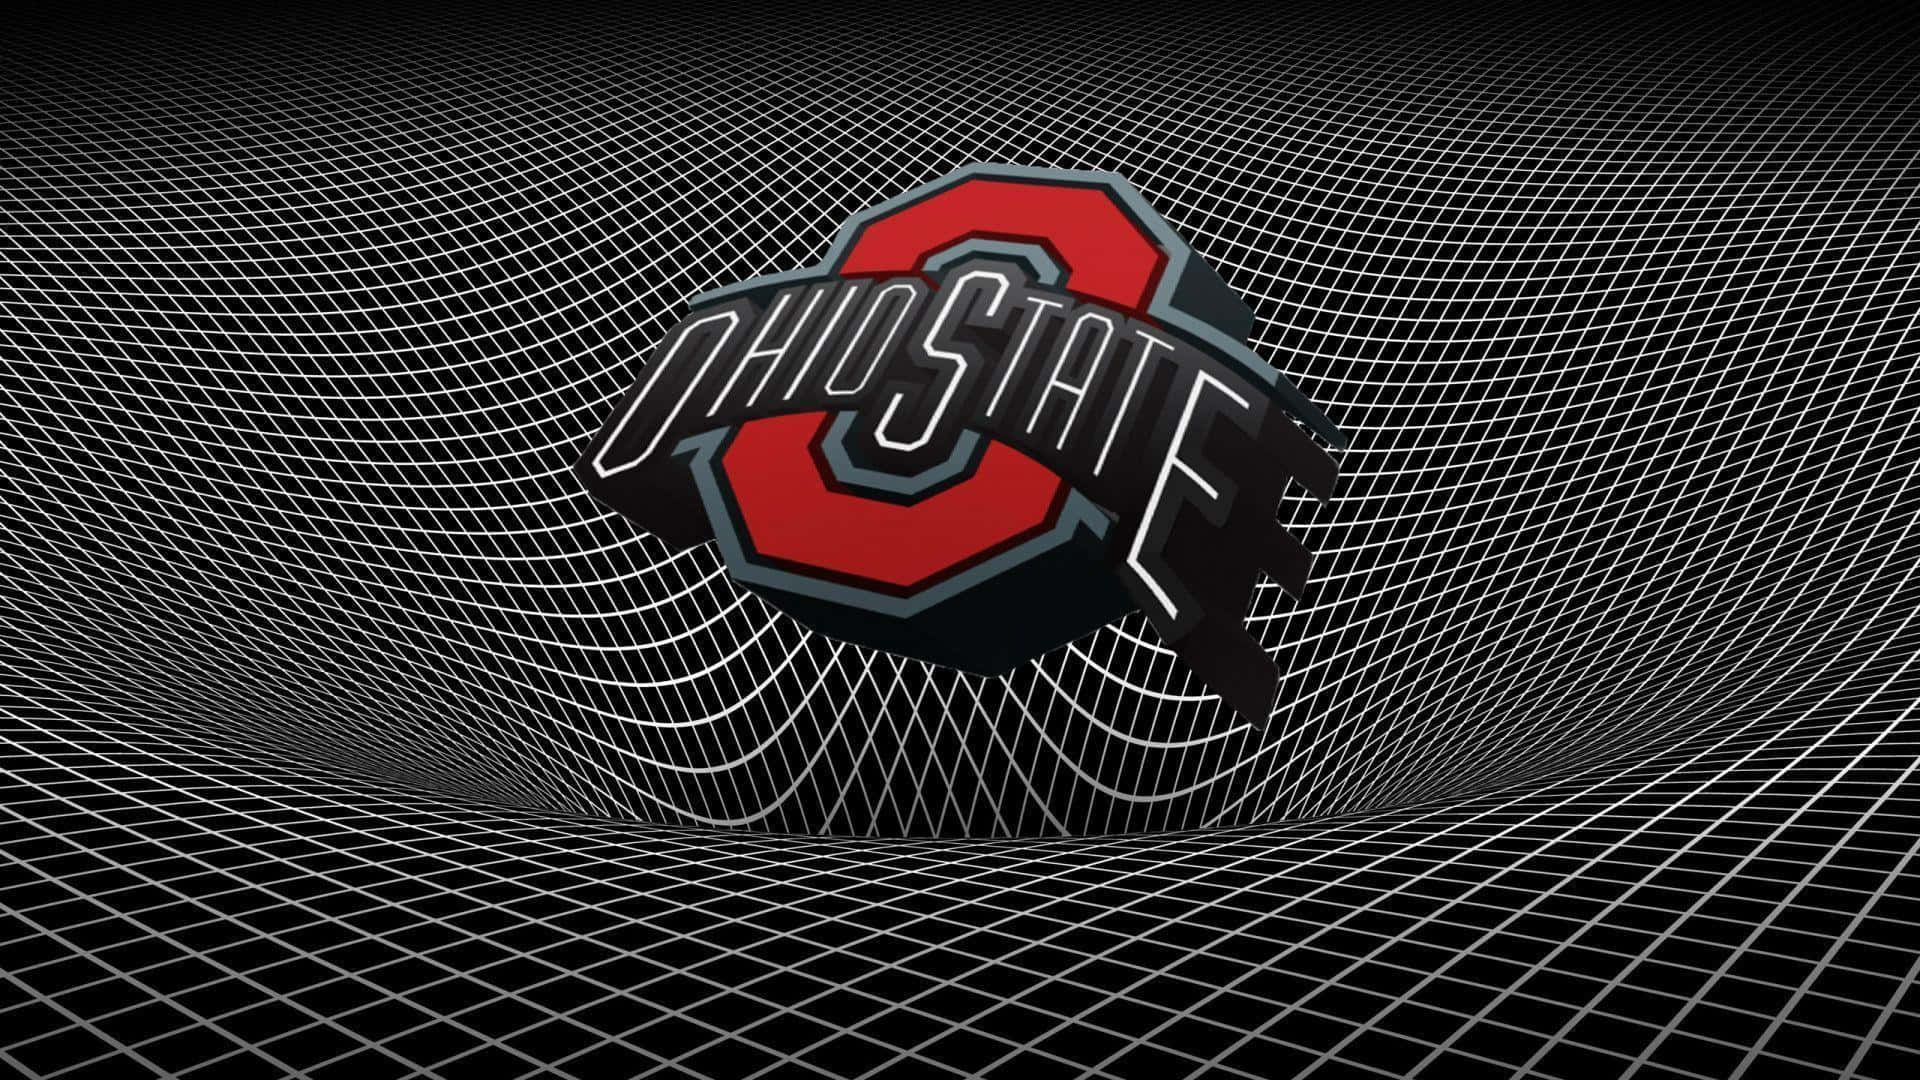 Ohio State Football Team Warped Grid Lines Digital Art Wallpaper